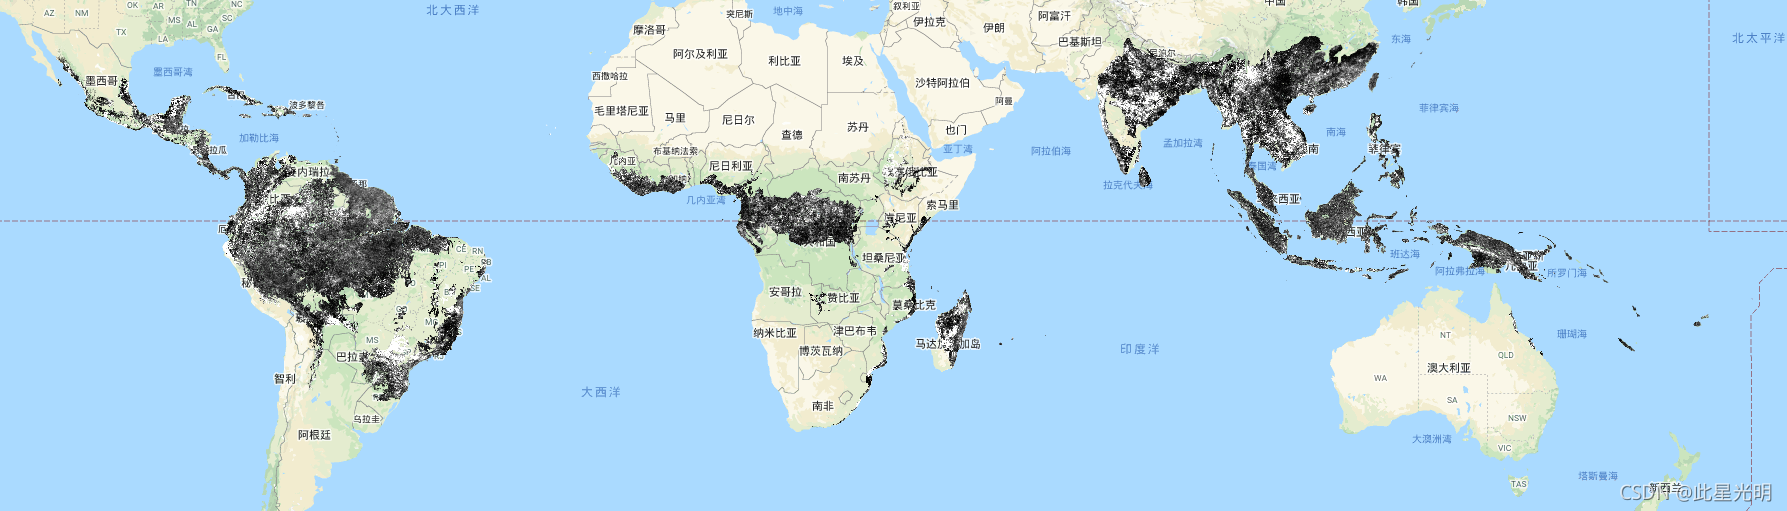 Google Earth Engine——植被统计数据集中的图像包含用于计算NTT的 “反转校正t统计“，NTT是由MODIS NDVI得出的植被颜色指数，FORMA用来测量褐化。